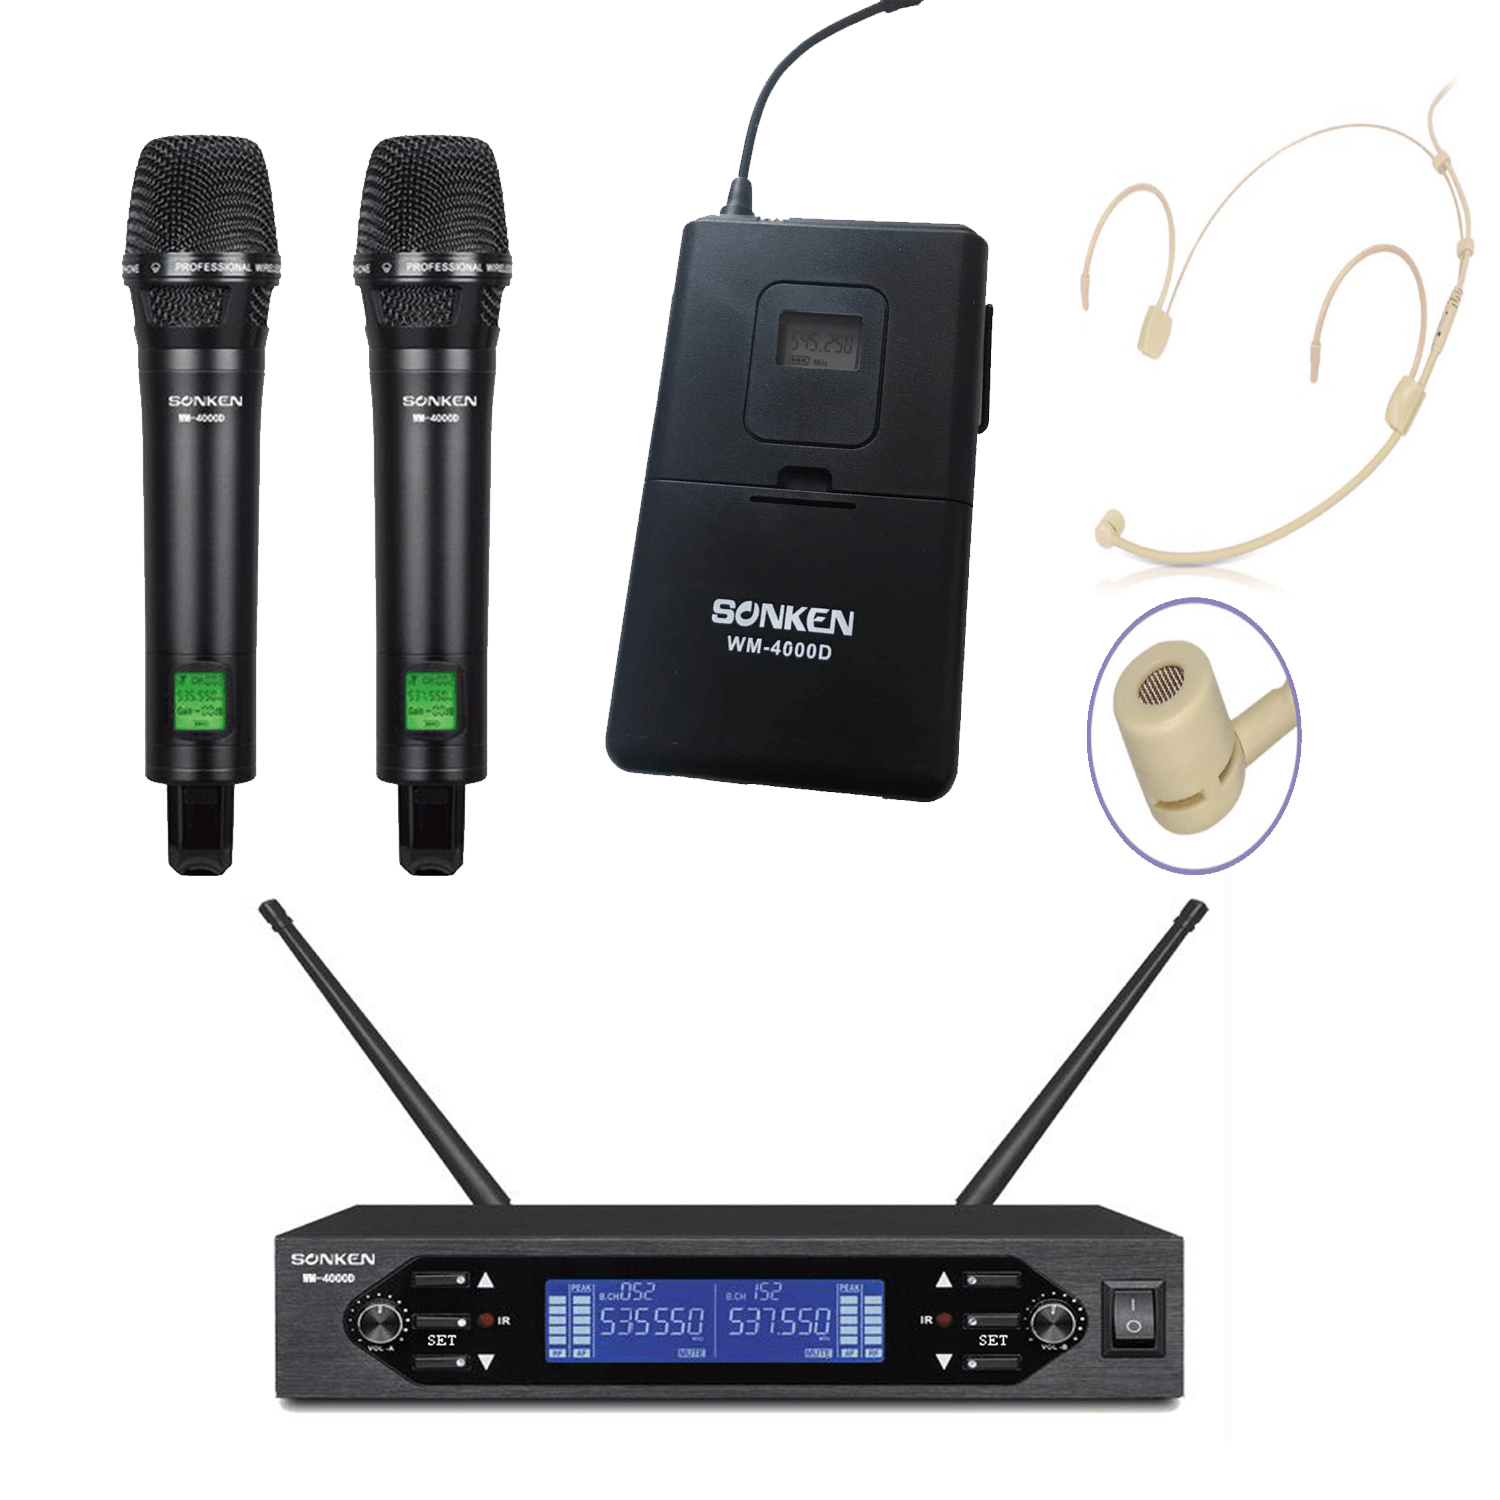 Sonken WM-4000D + Body Pack Headset - PRO 200 Channel UHF Wireless Microphones (2) + Body Pack & Headset Microphone - Karaoke Home Entertainment